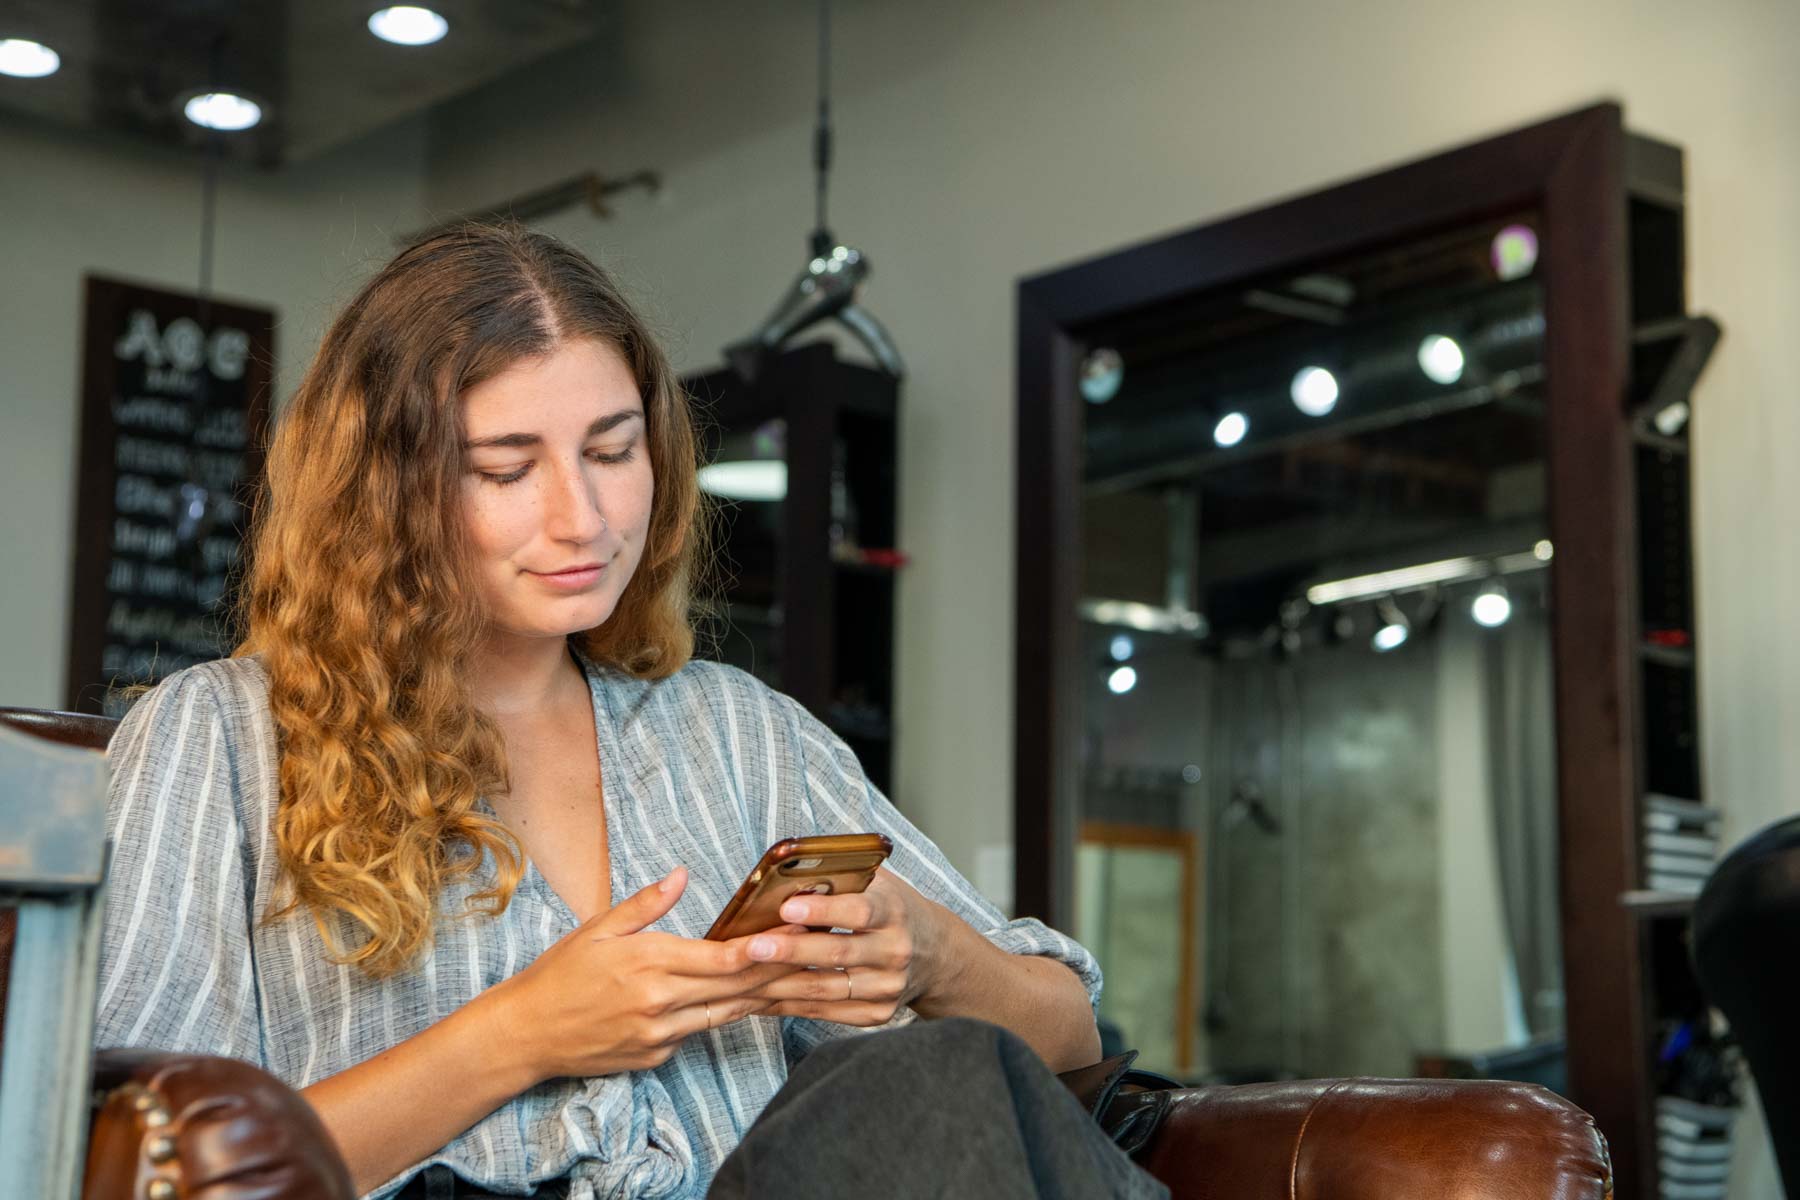 Magazine Jukebox lifestyle image of woman scrolling phone